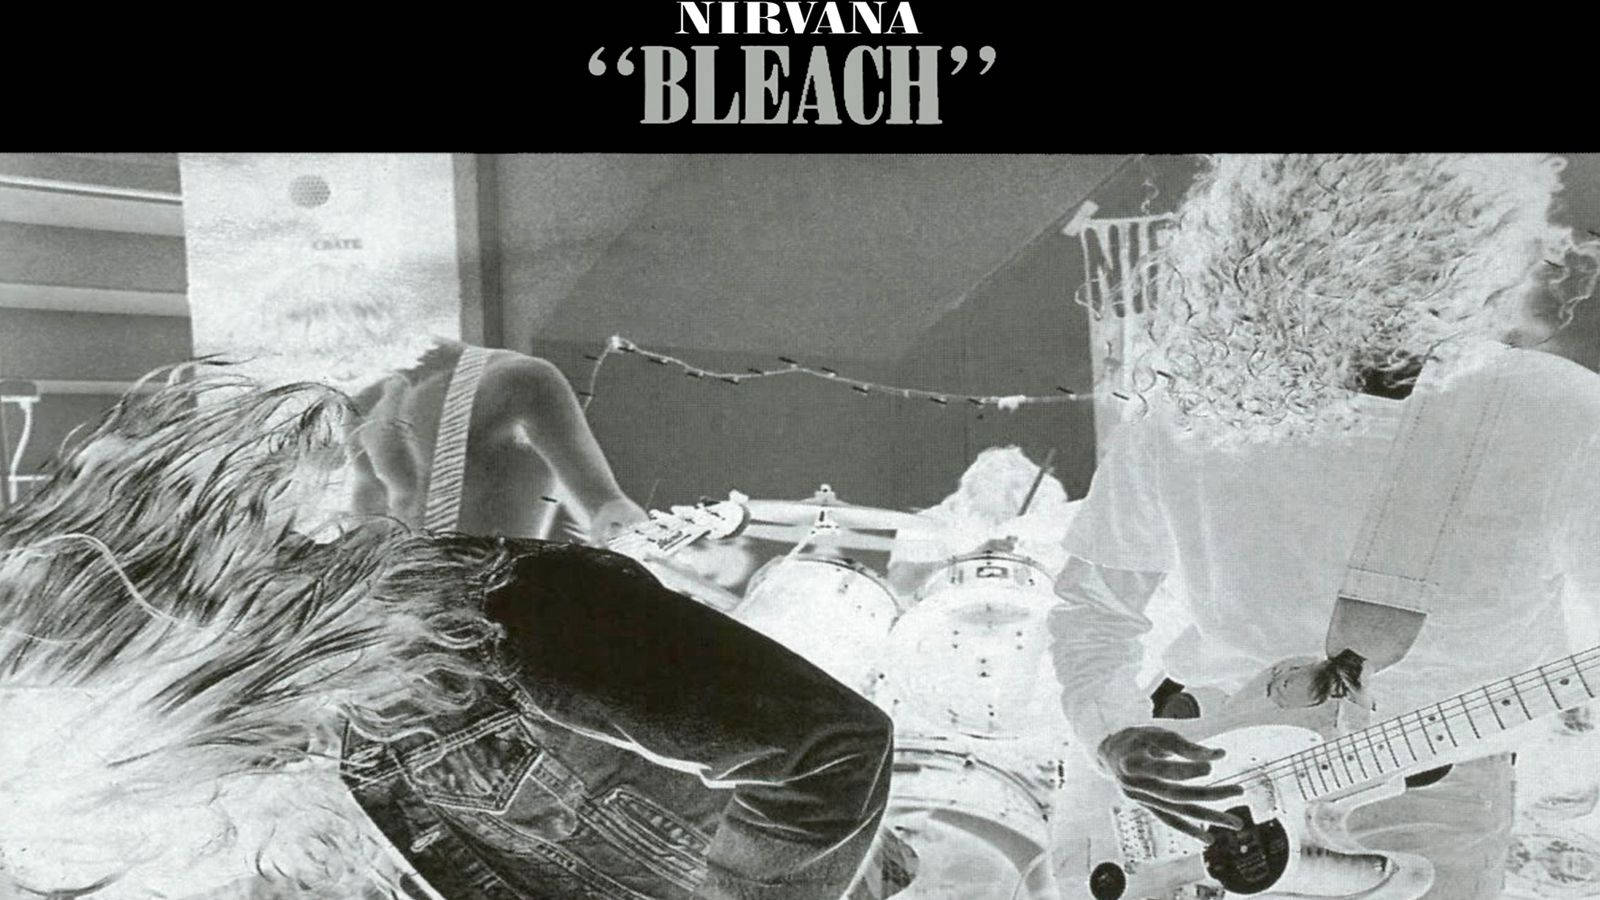 Nirvana Bleach Album Cover Wallpaper